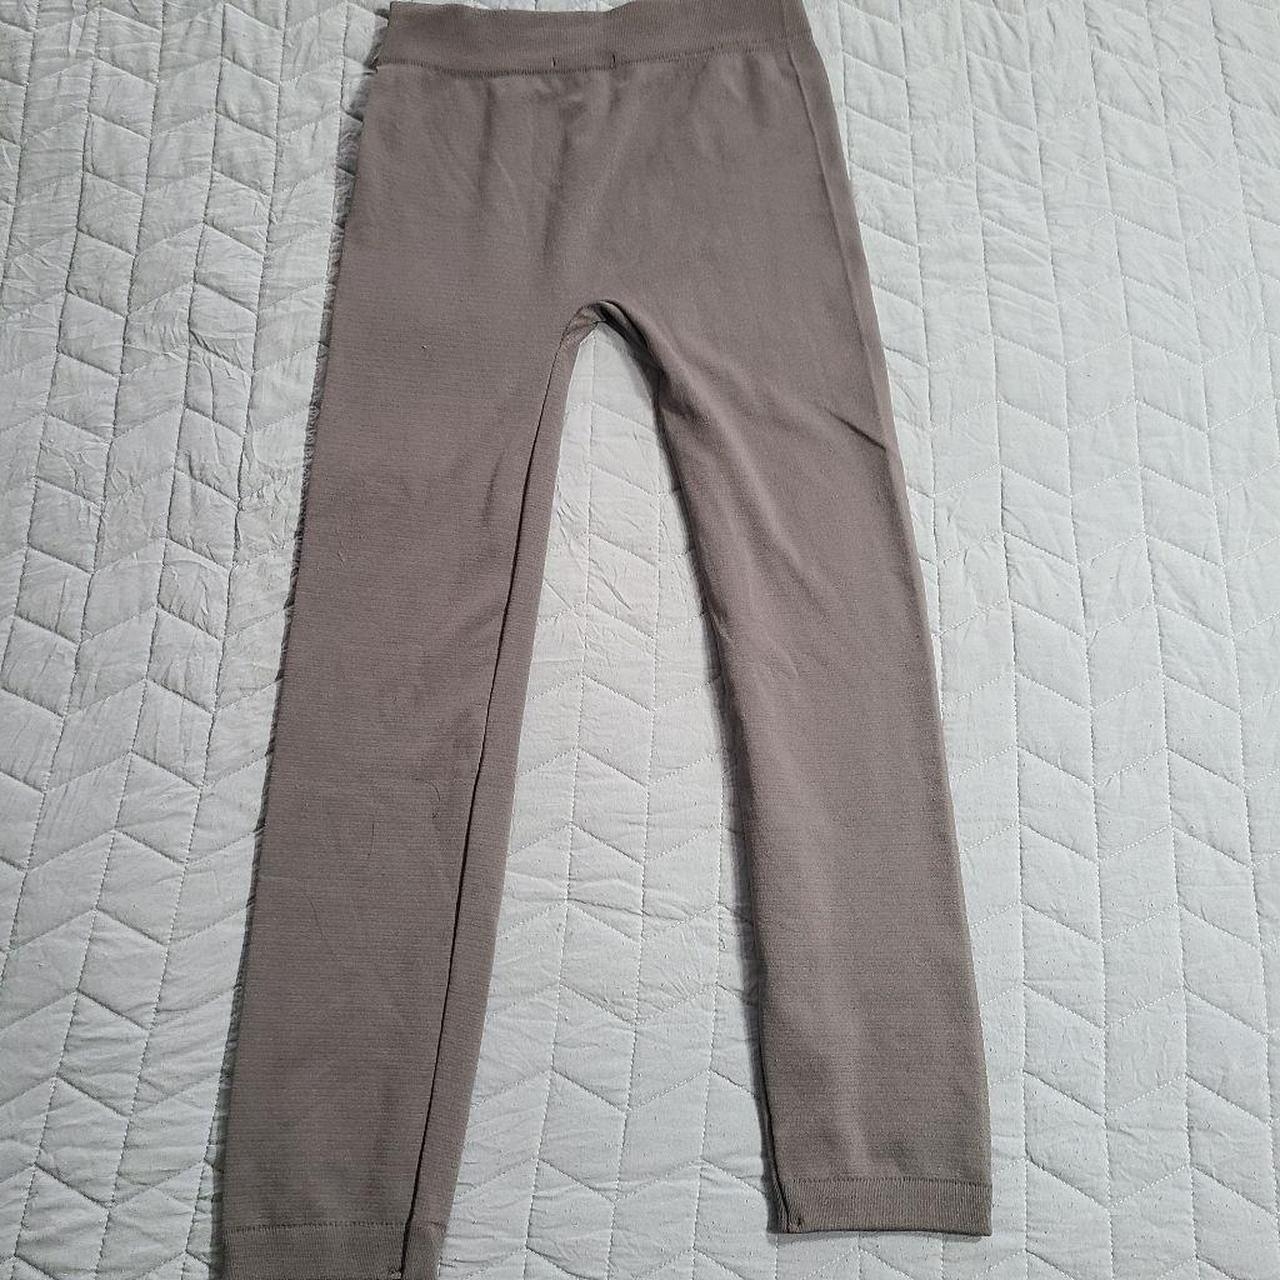 Product Image 2 - F&F charcoal gray leggings (worn